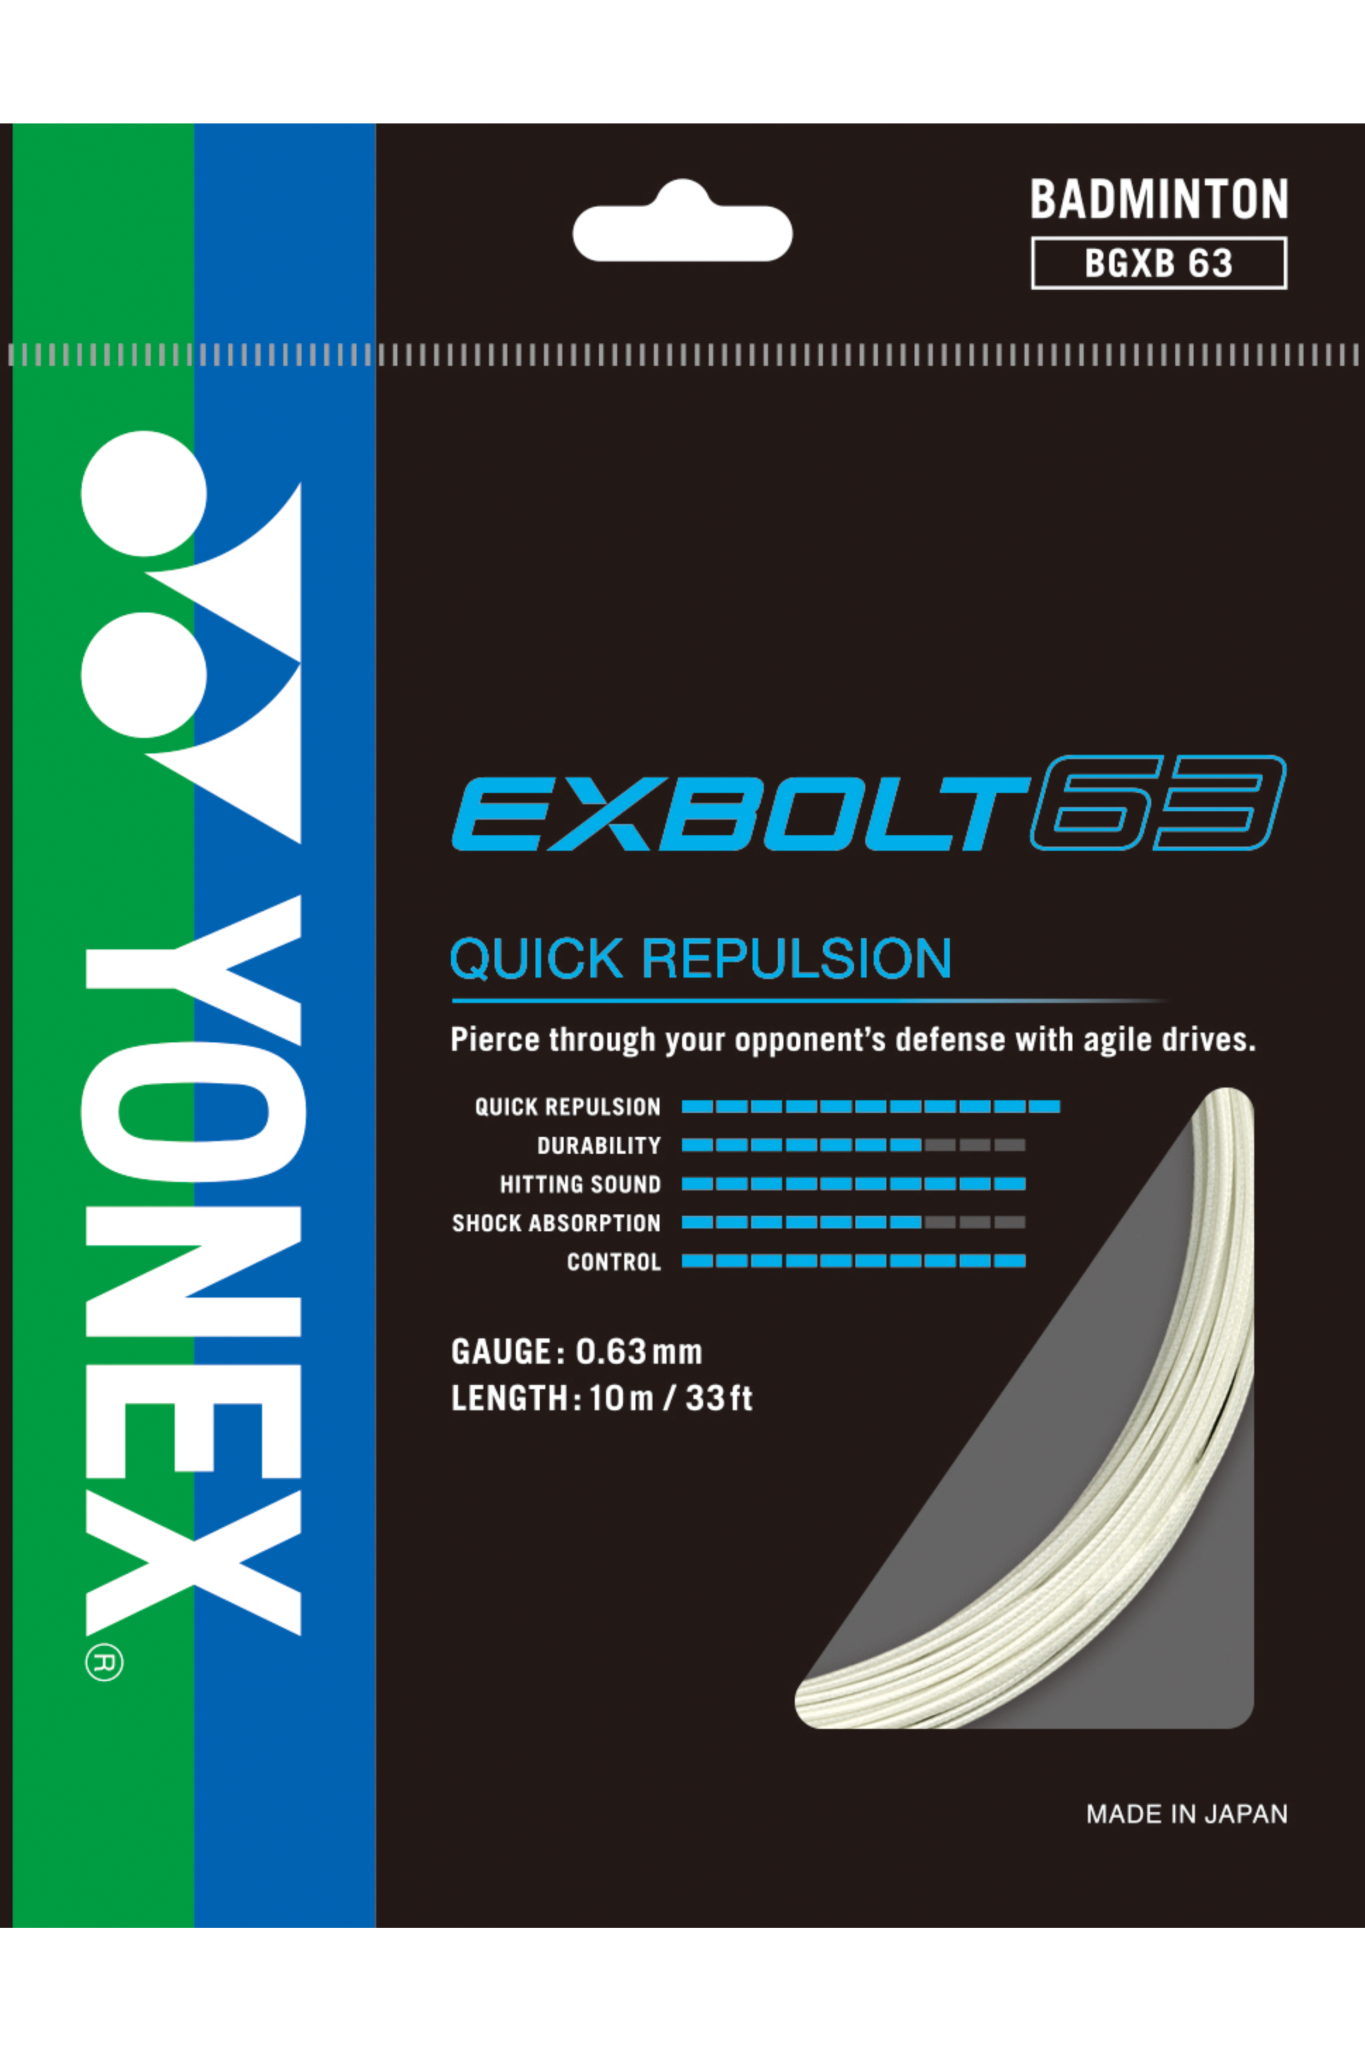 Yonex Badminton String Exbolt 63 - 10m Set & 200m Reel - Nexus Badminton